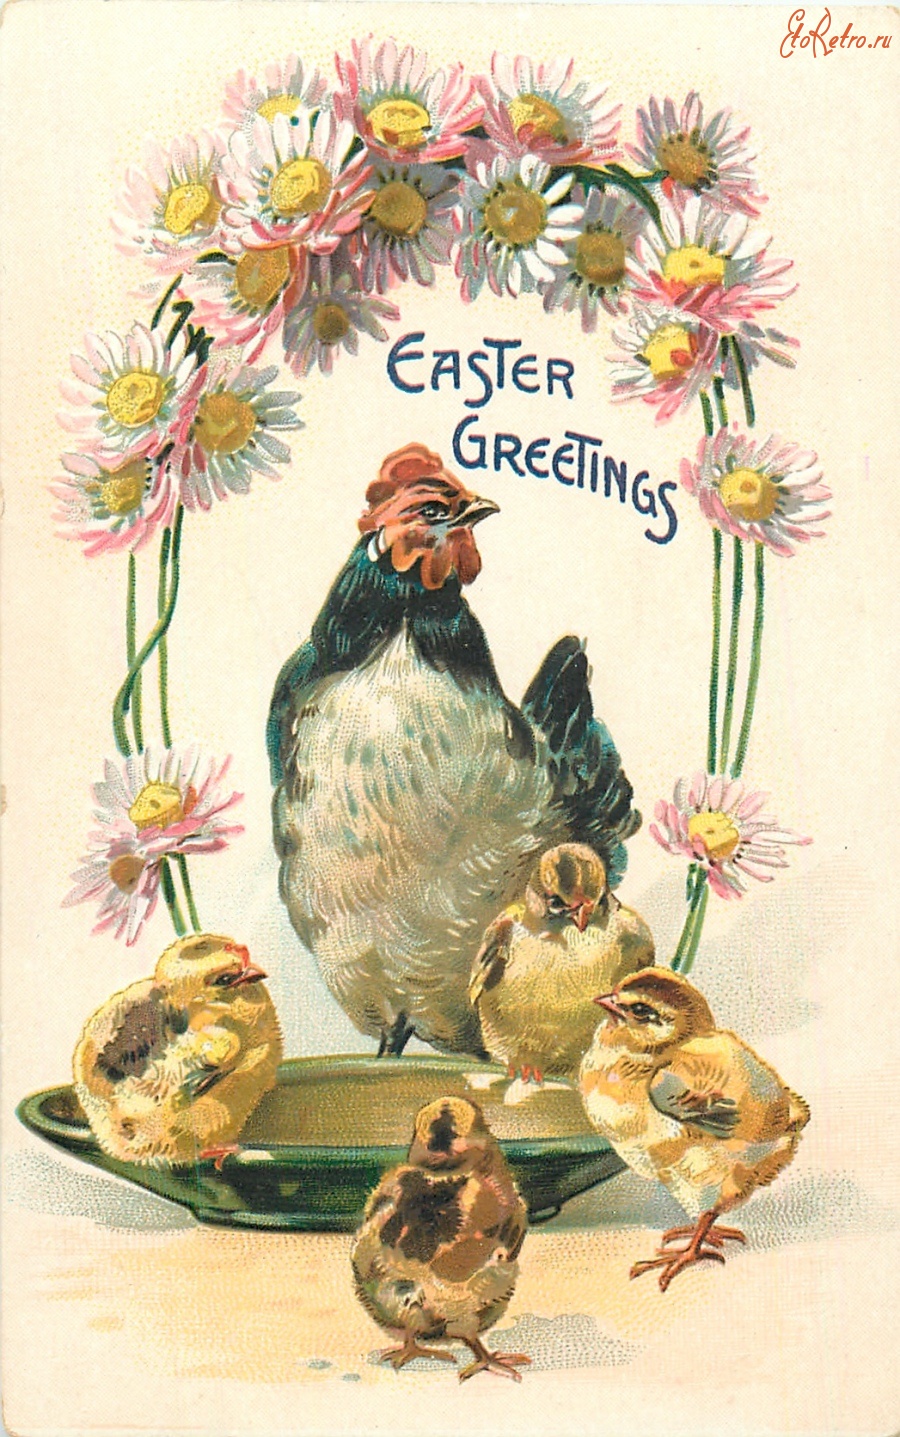 Ретро открытки - Счастливой Пасхи. Курица, цыплята и маргаритки